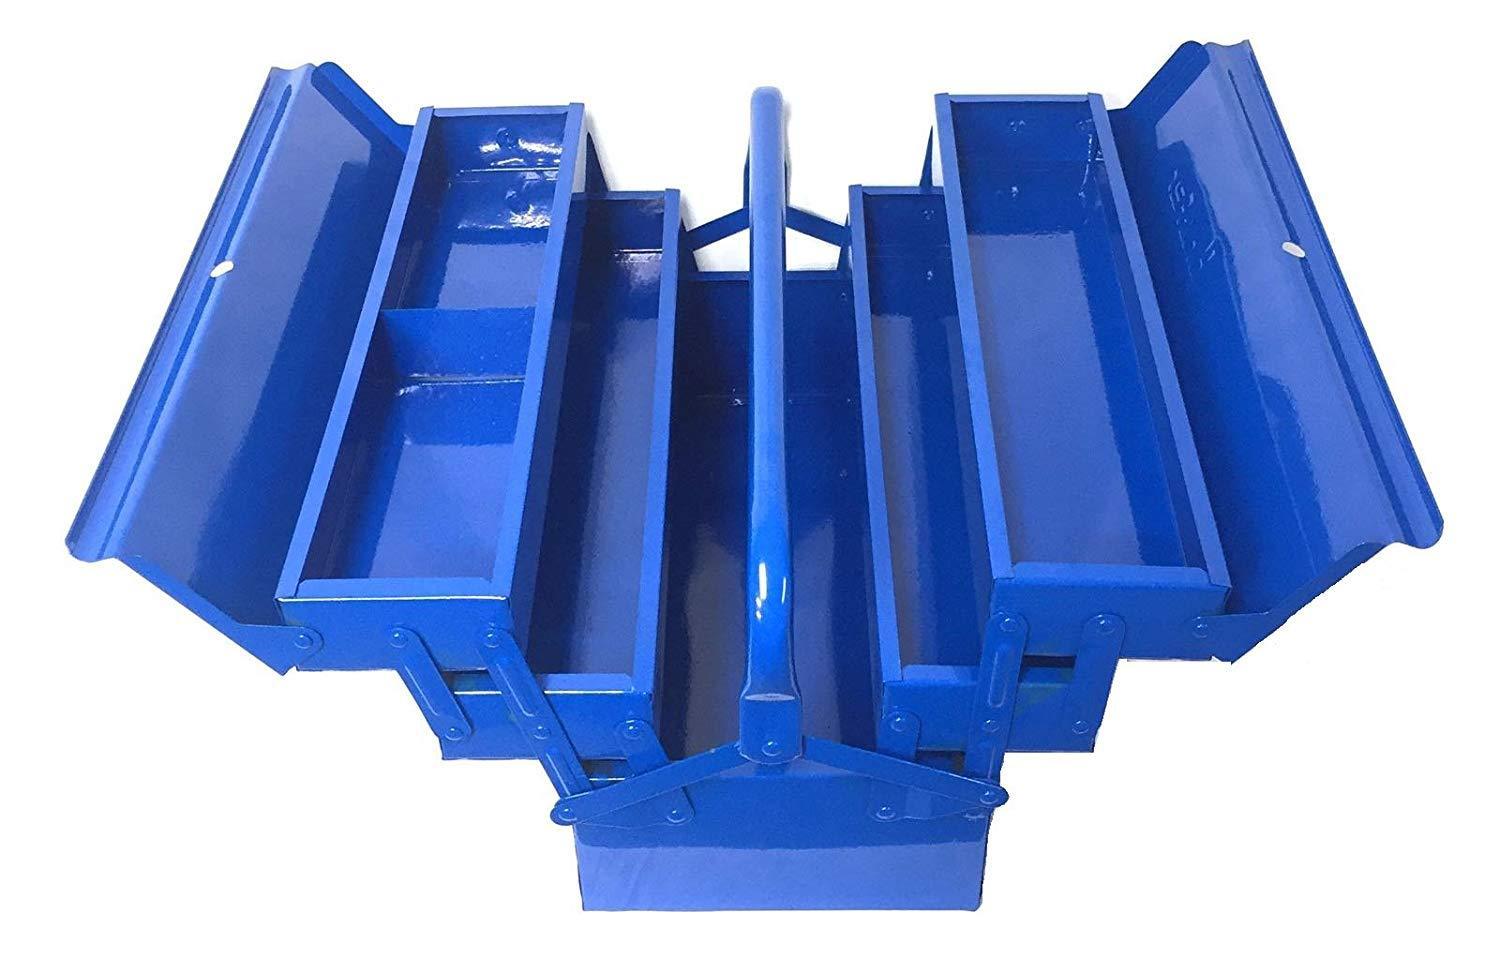 5-Tray Metal Tool Box 16-inch, Blue | Supply Master | Accra, Ghana Tools Building Steel Engineering Hardware tool